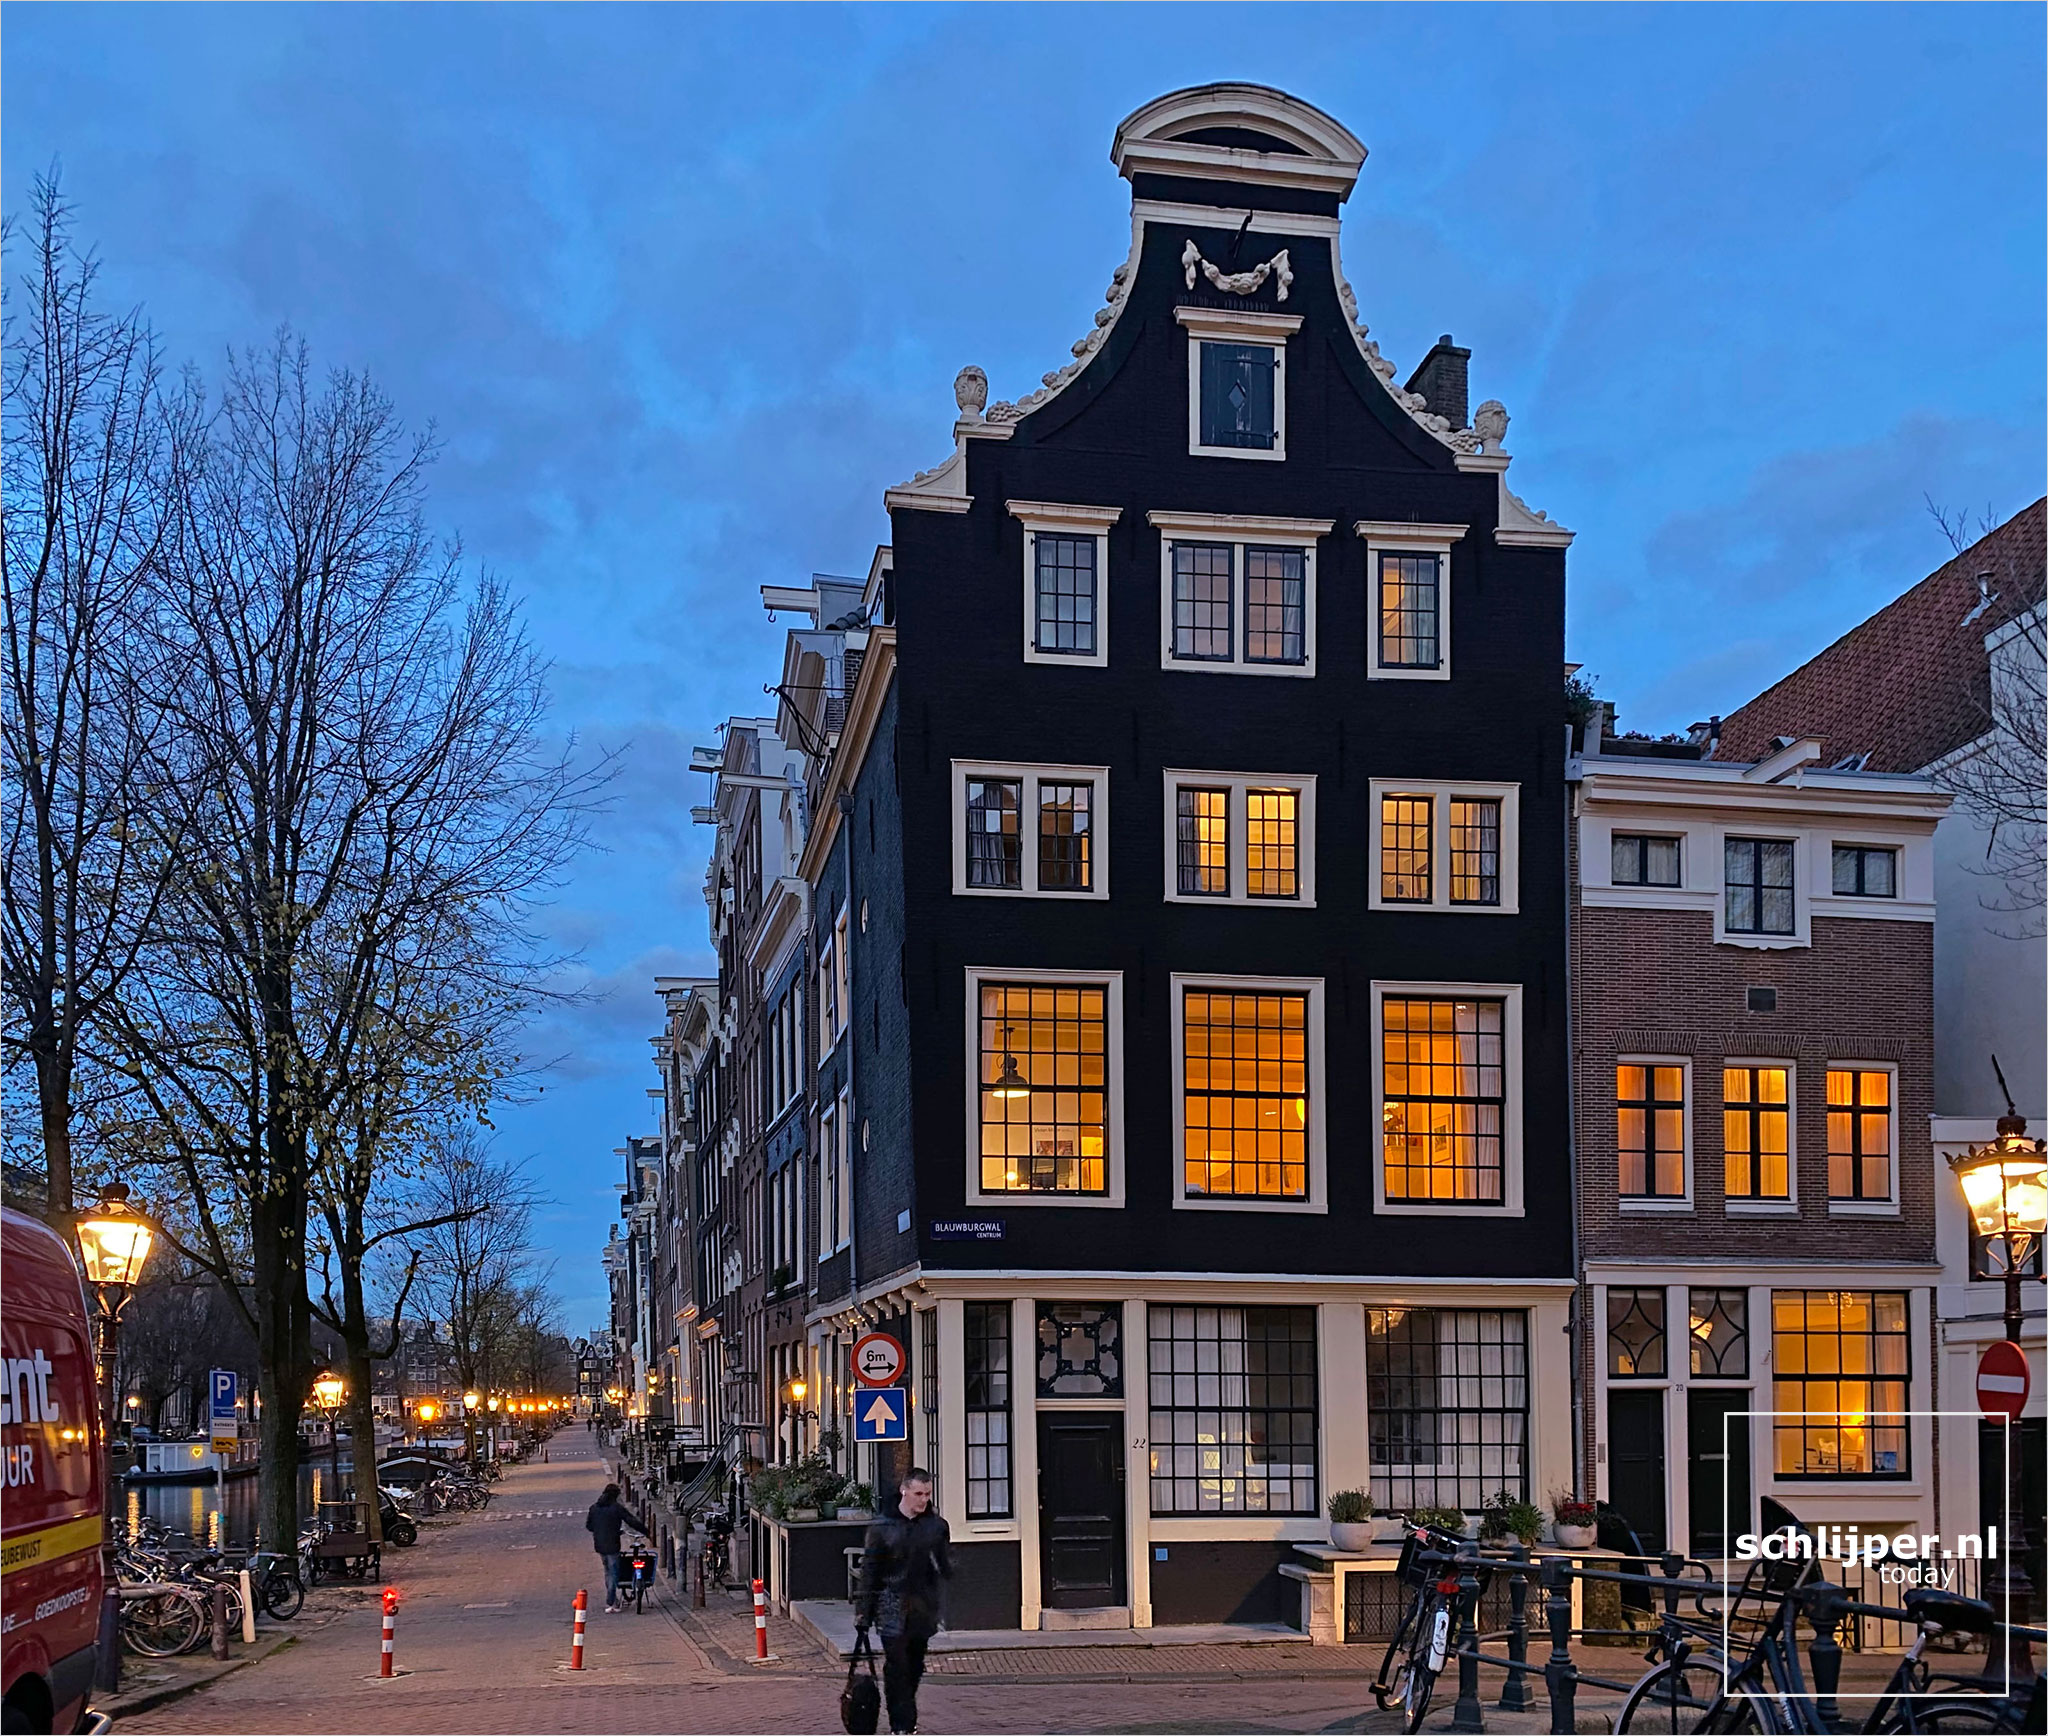 The Netherlands, Amsterdam, 4 december 2020